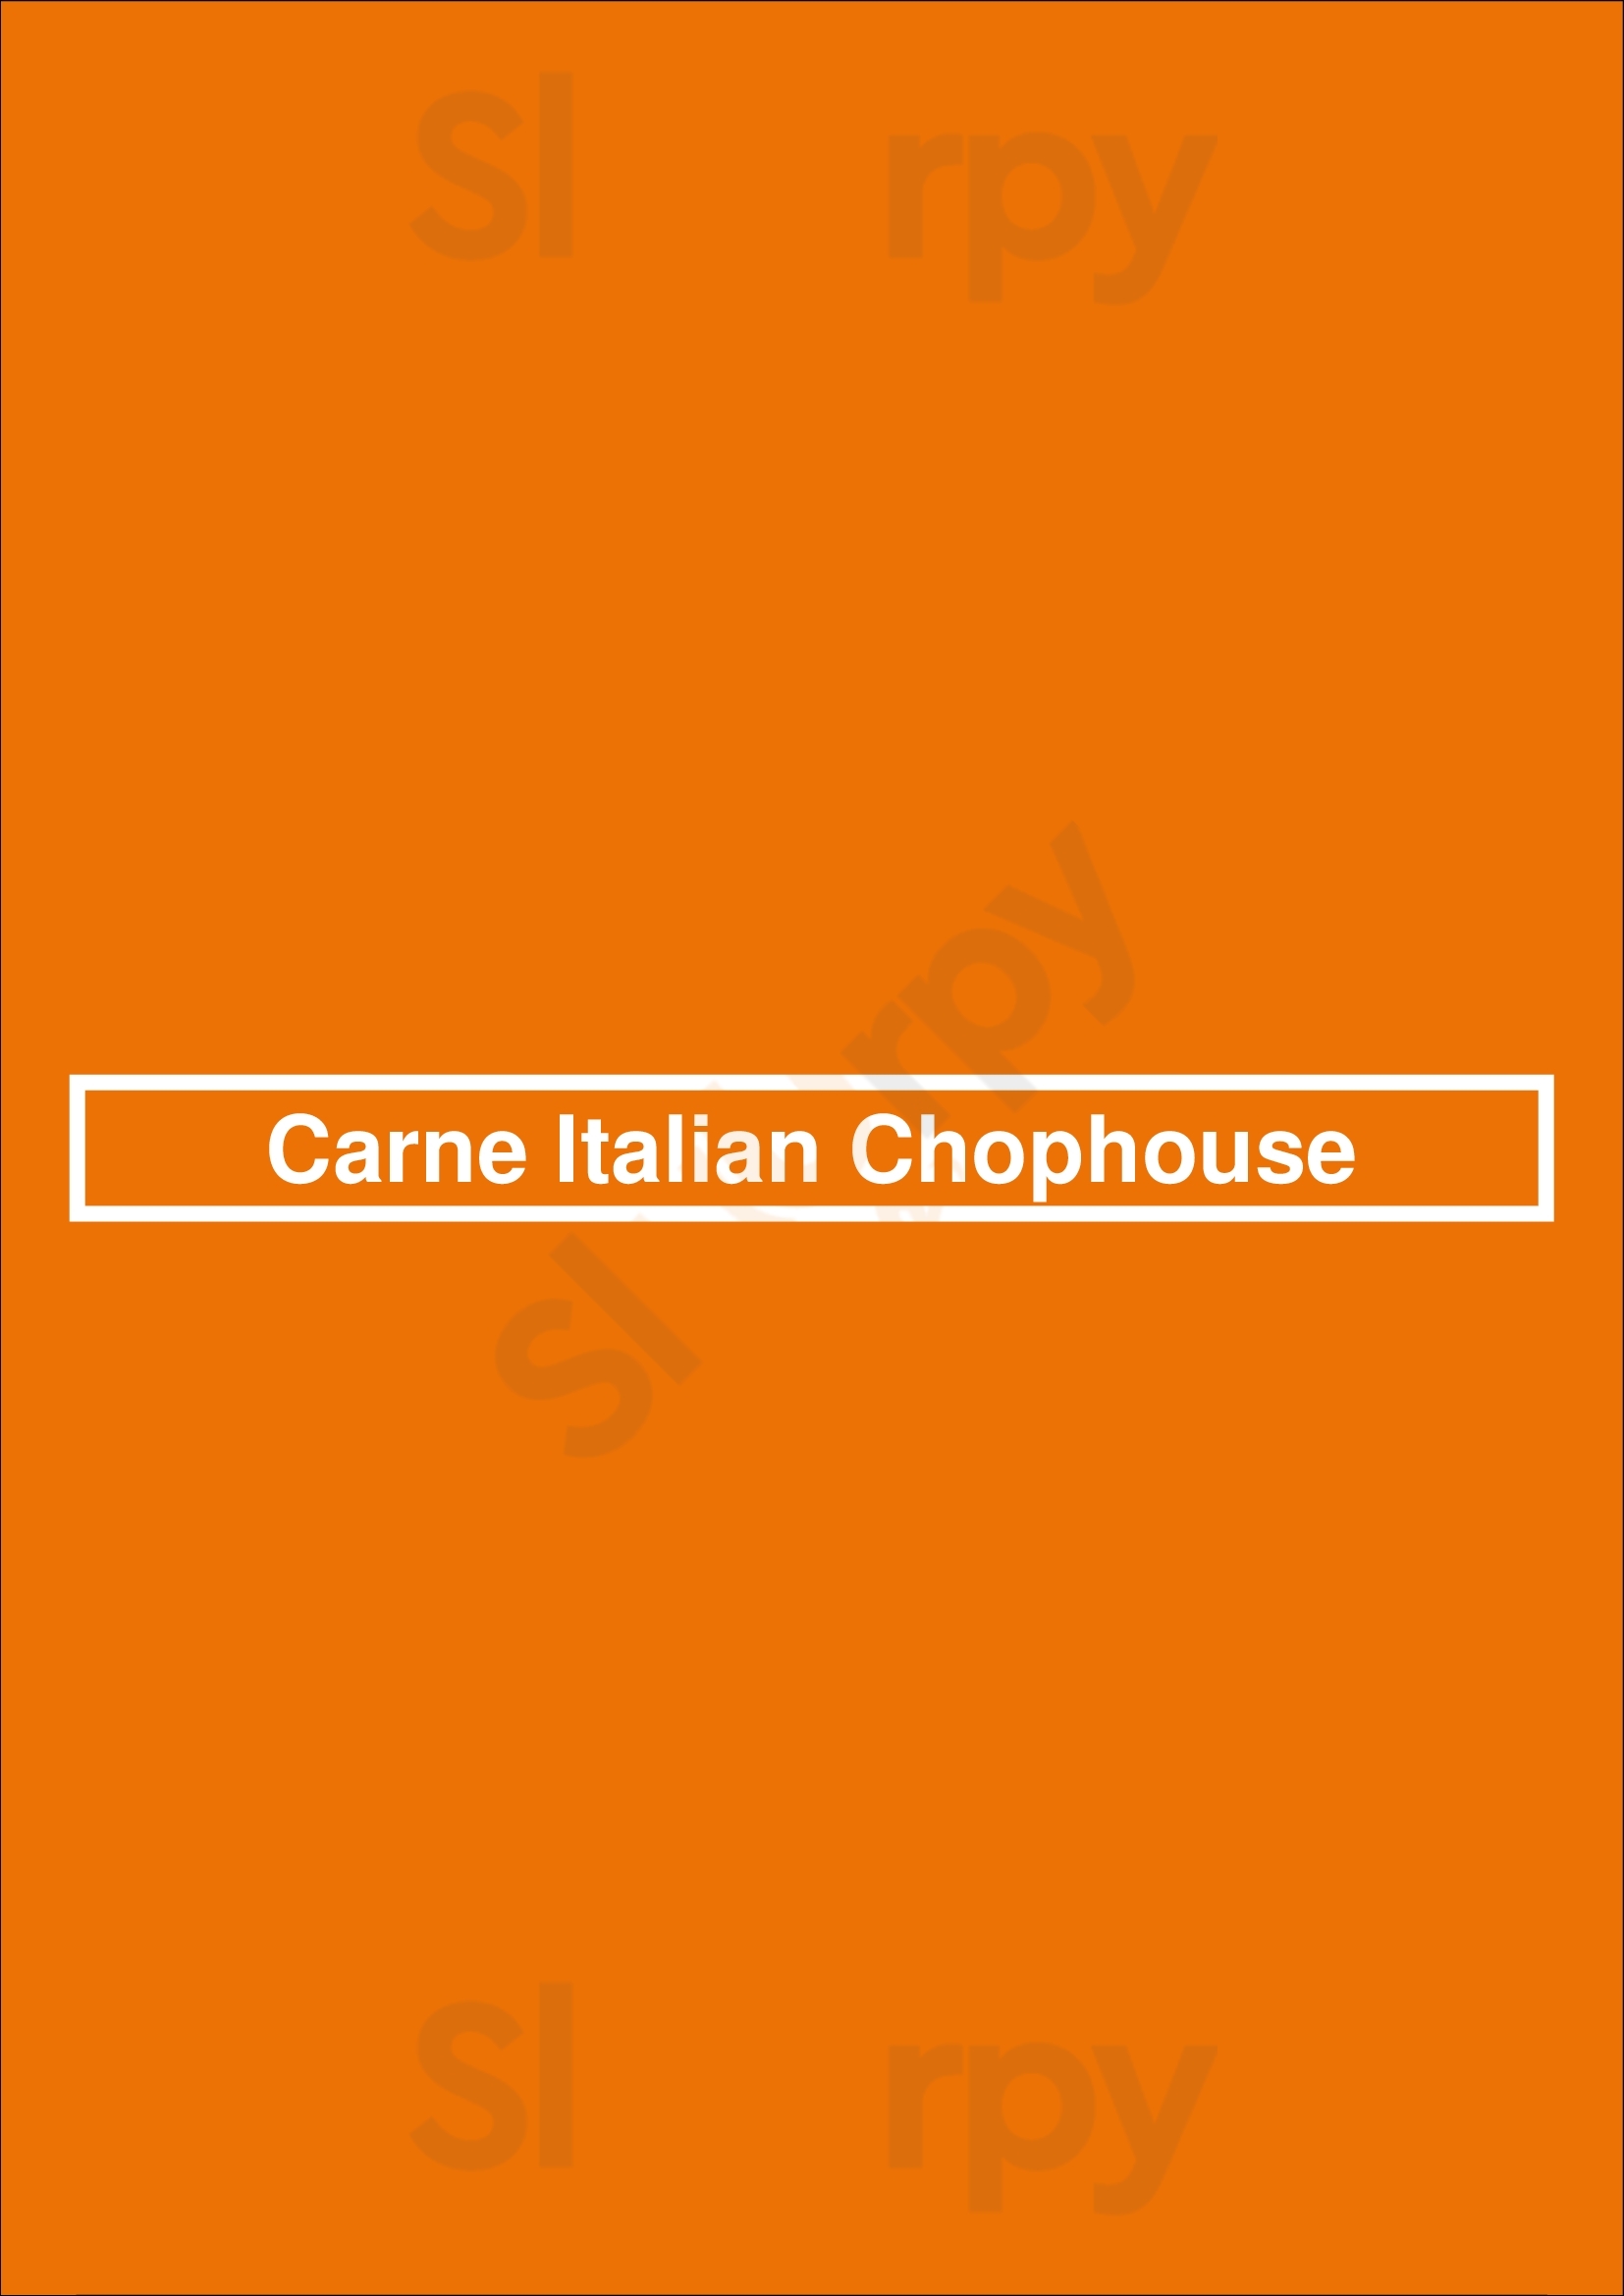 Carne Italian Chophouse Winnipeg Menu - 1